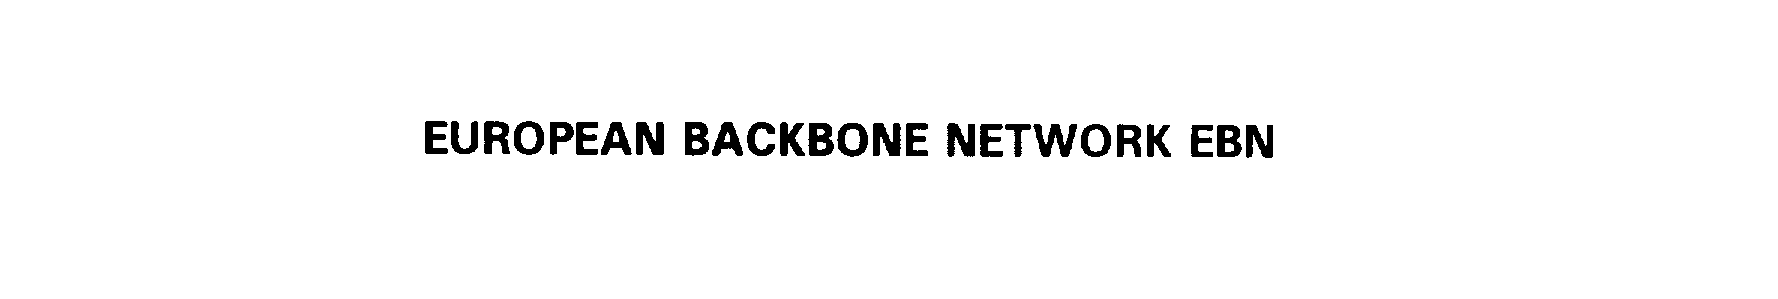  EUROPEAN BACKBONE NETWORK EBN